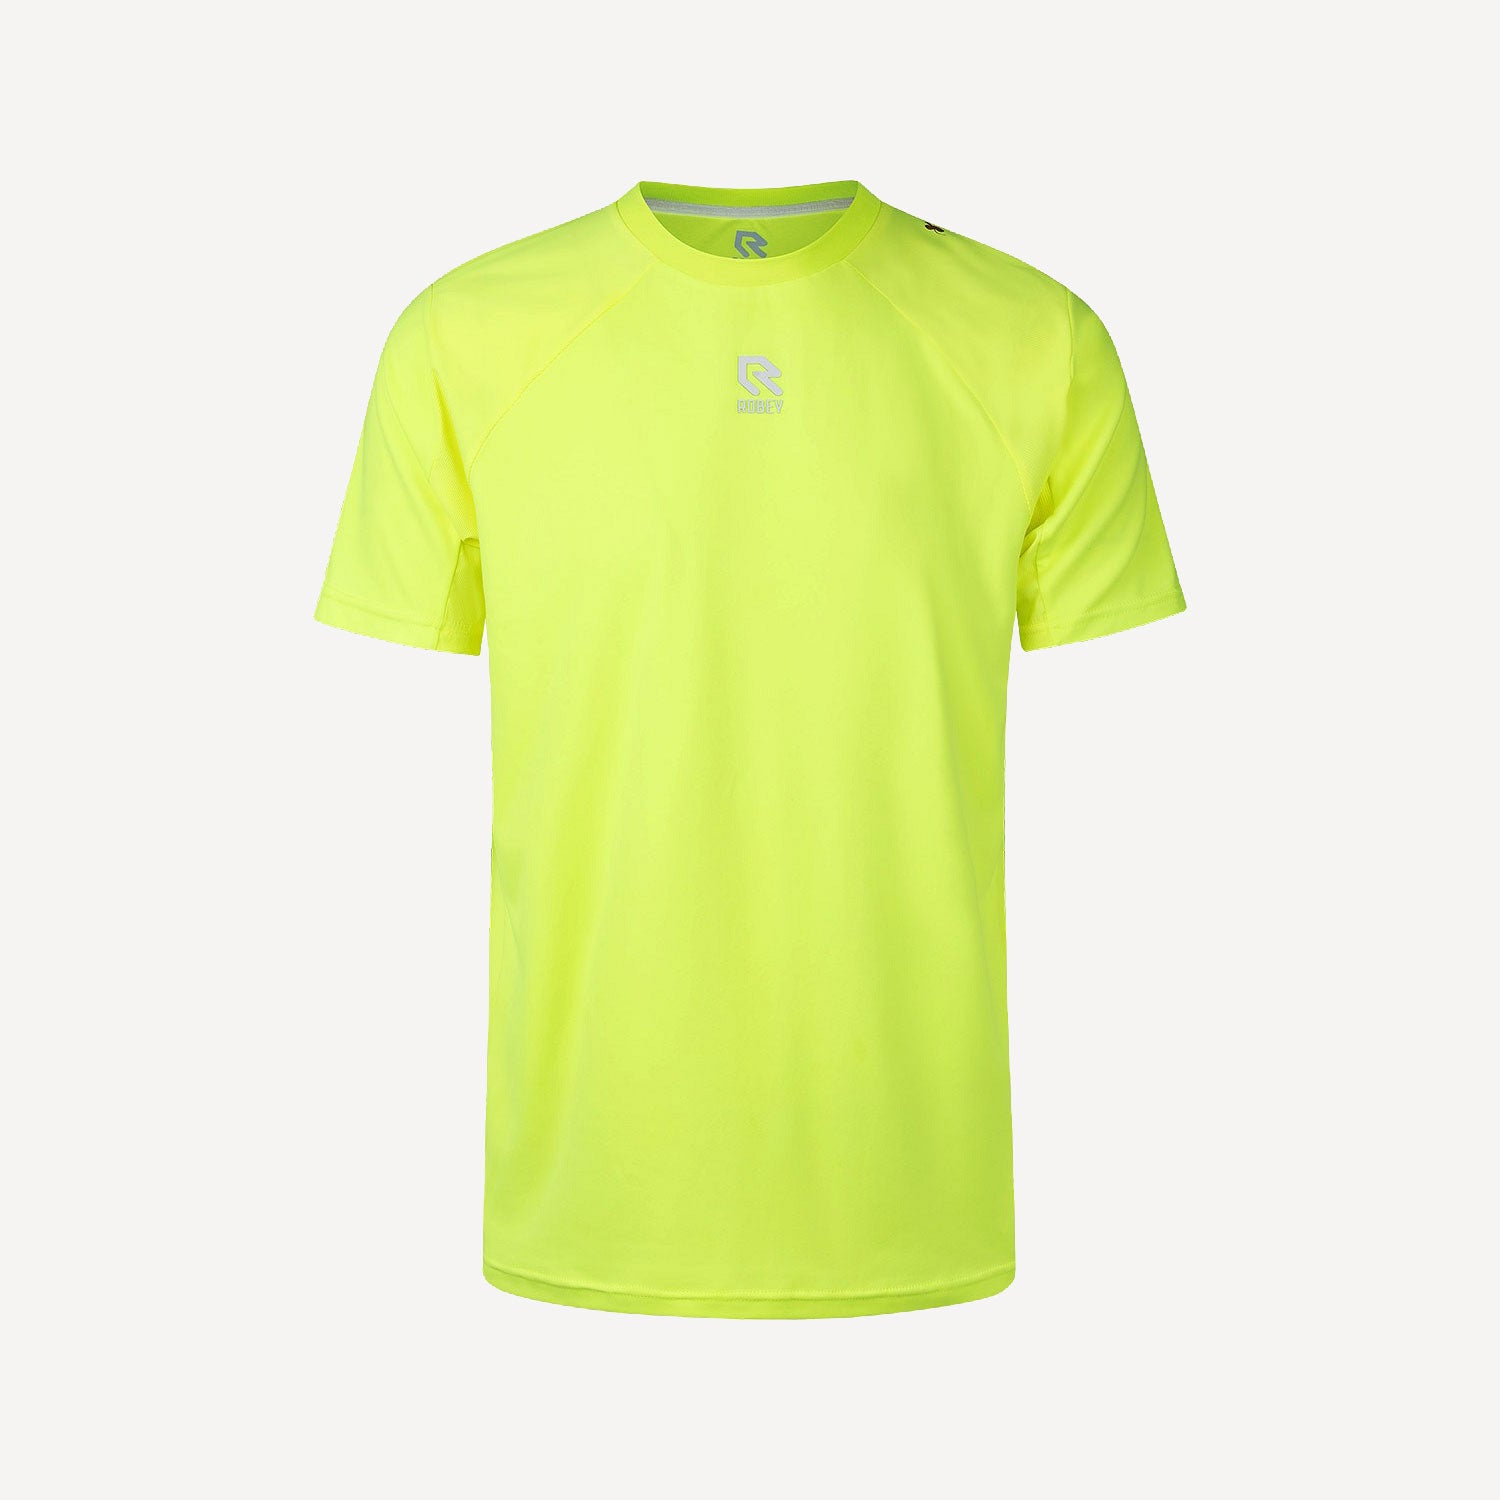 Robey Ace Men's Tennis Shirt - Yellow (1)